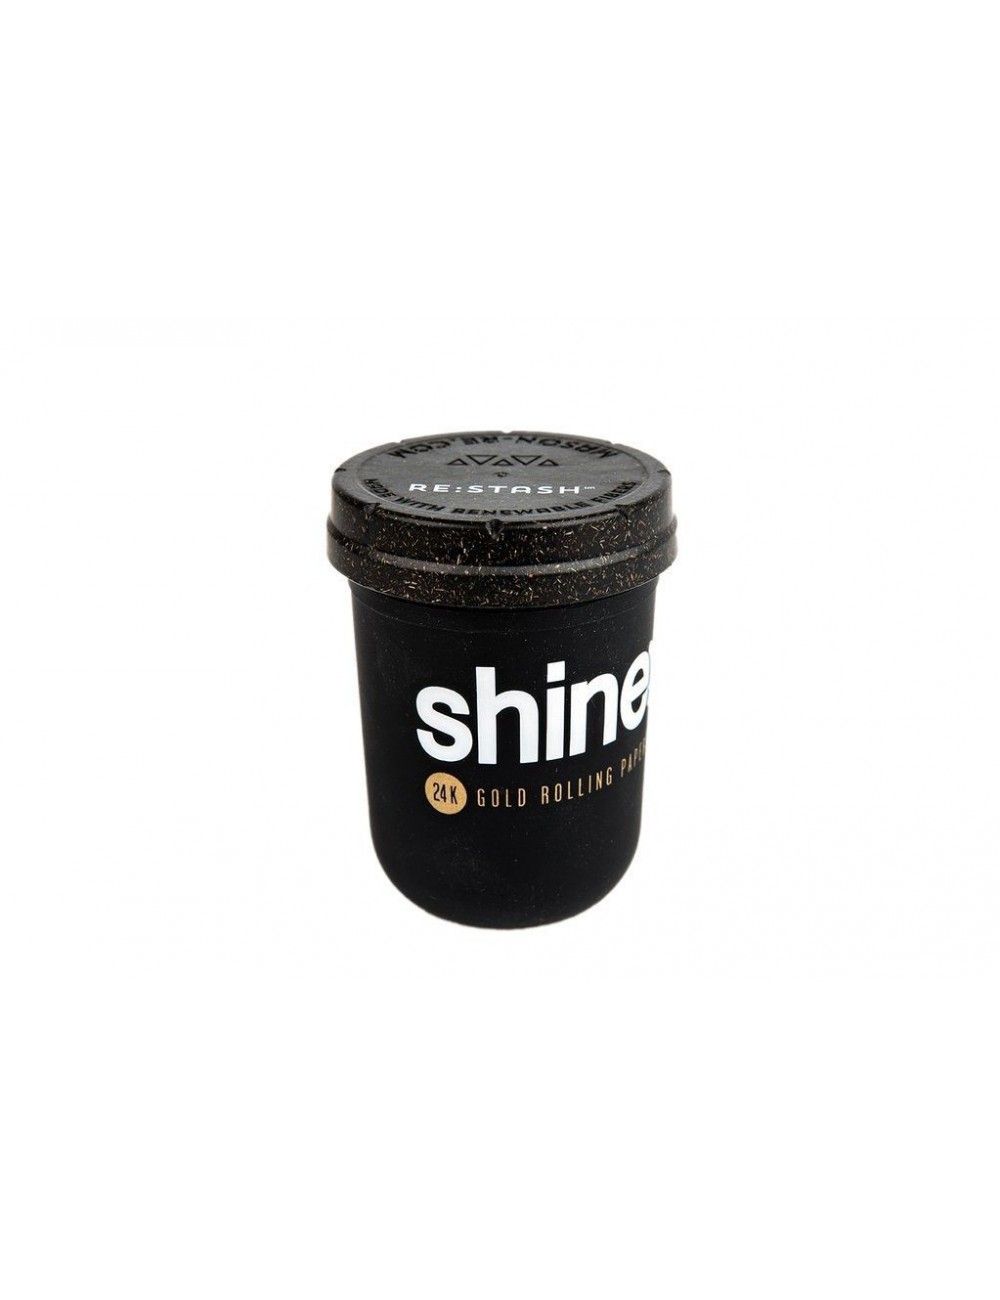 Shine x Re:Stash Jar Black 8oz